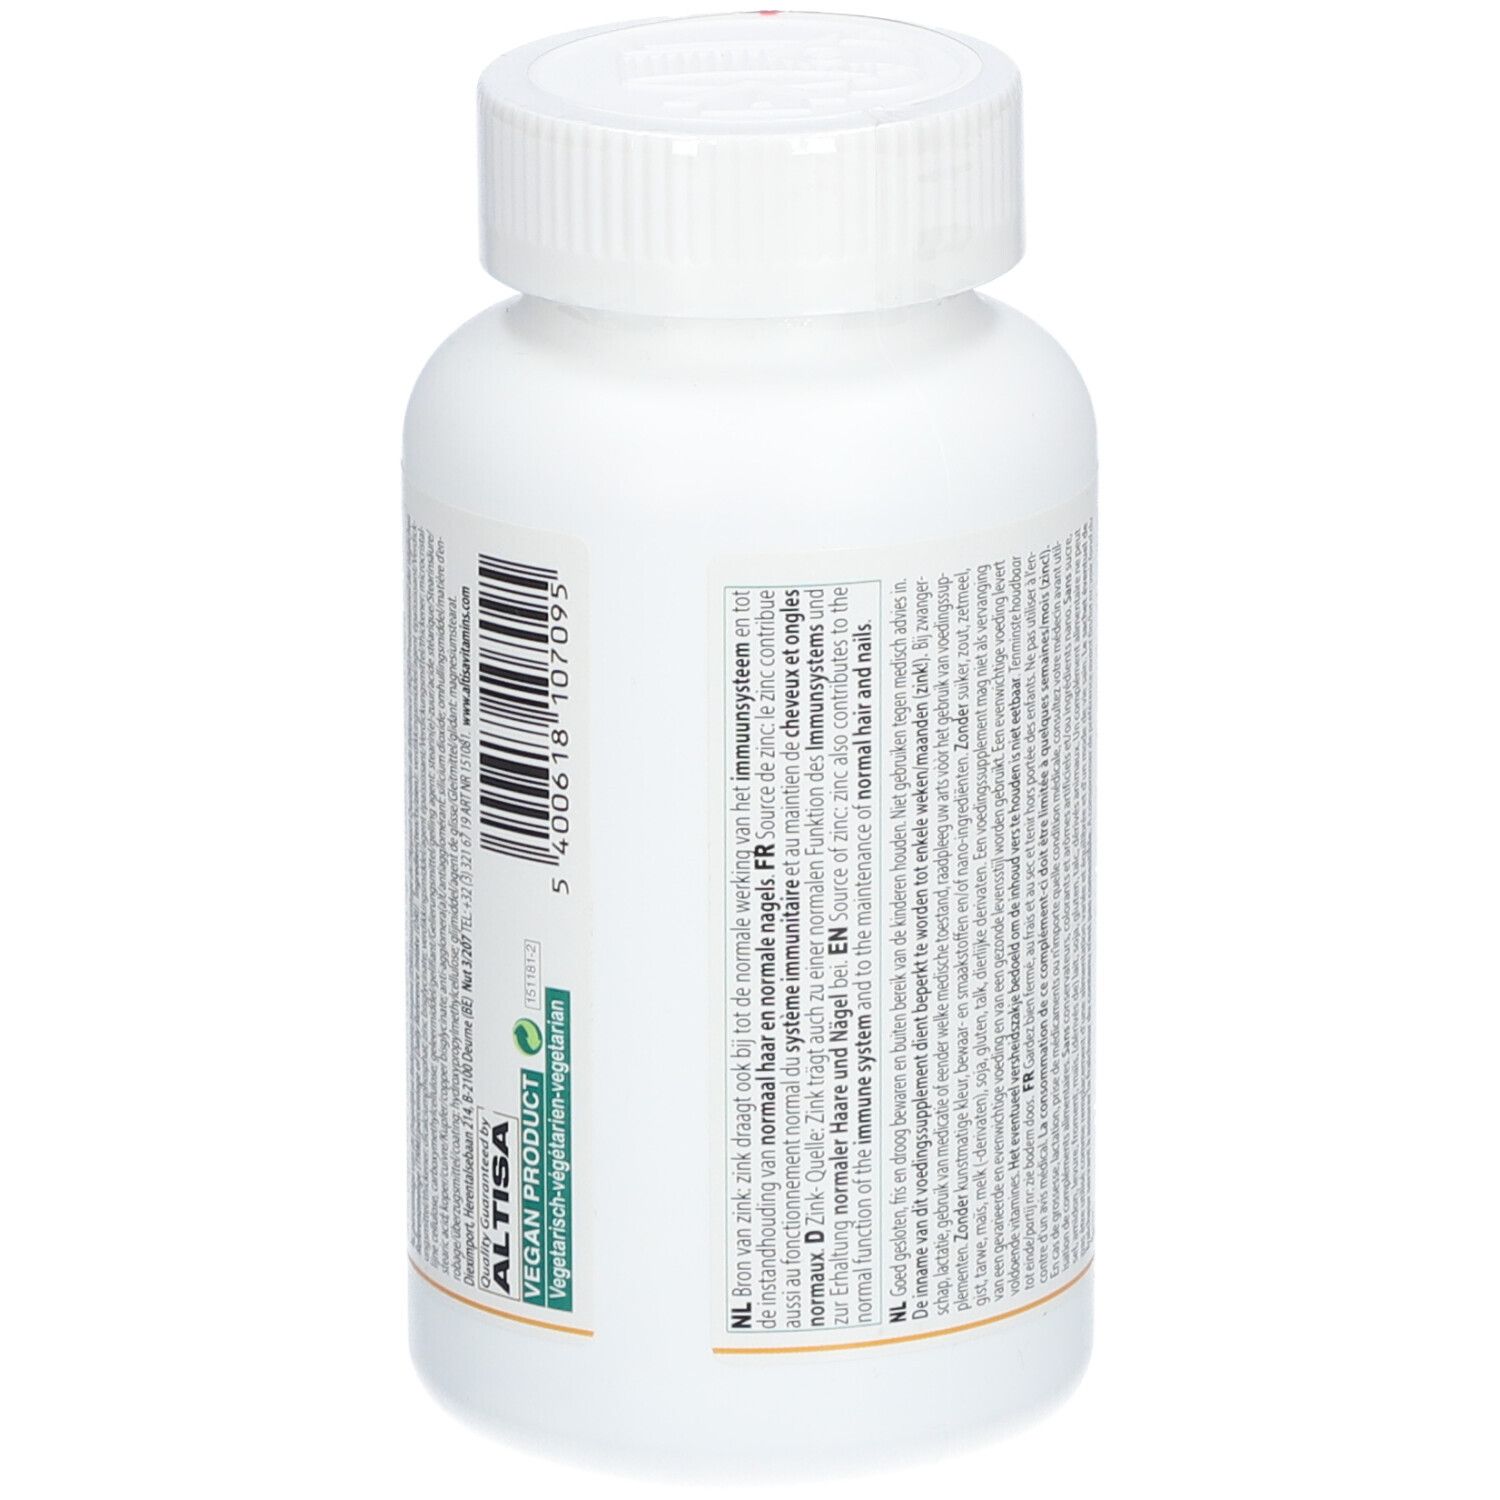 Altisa® Zinc Bisglycinate 40 mg